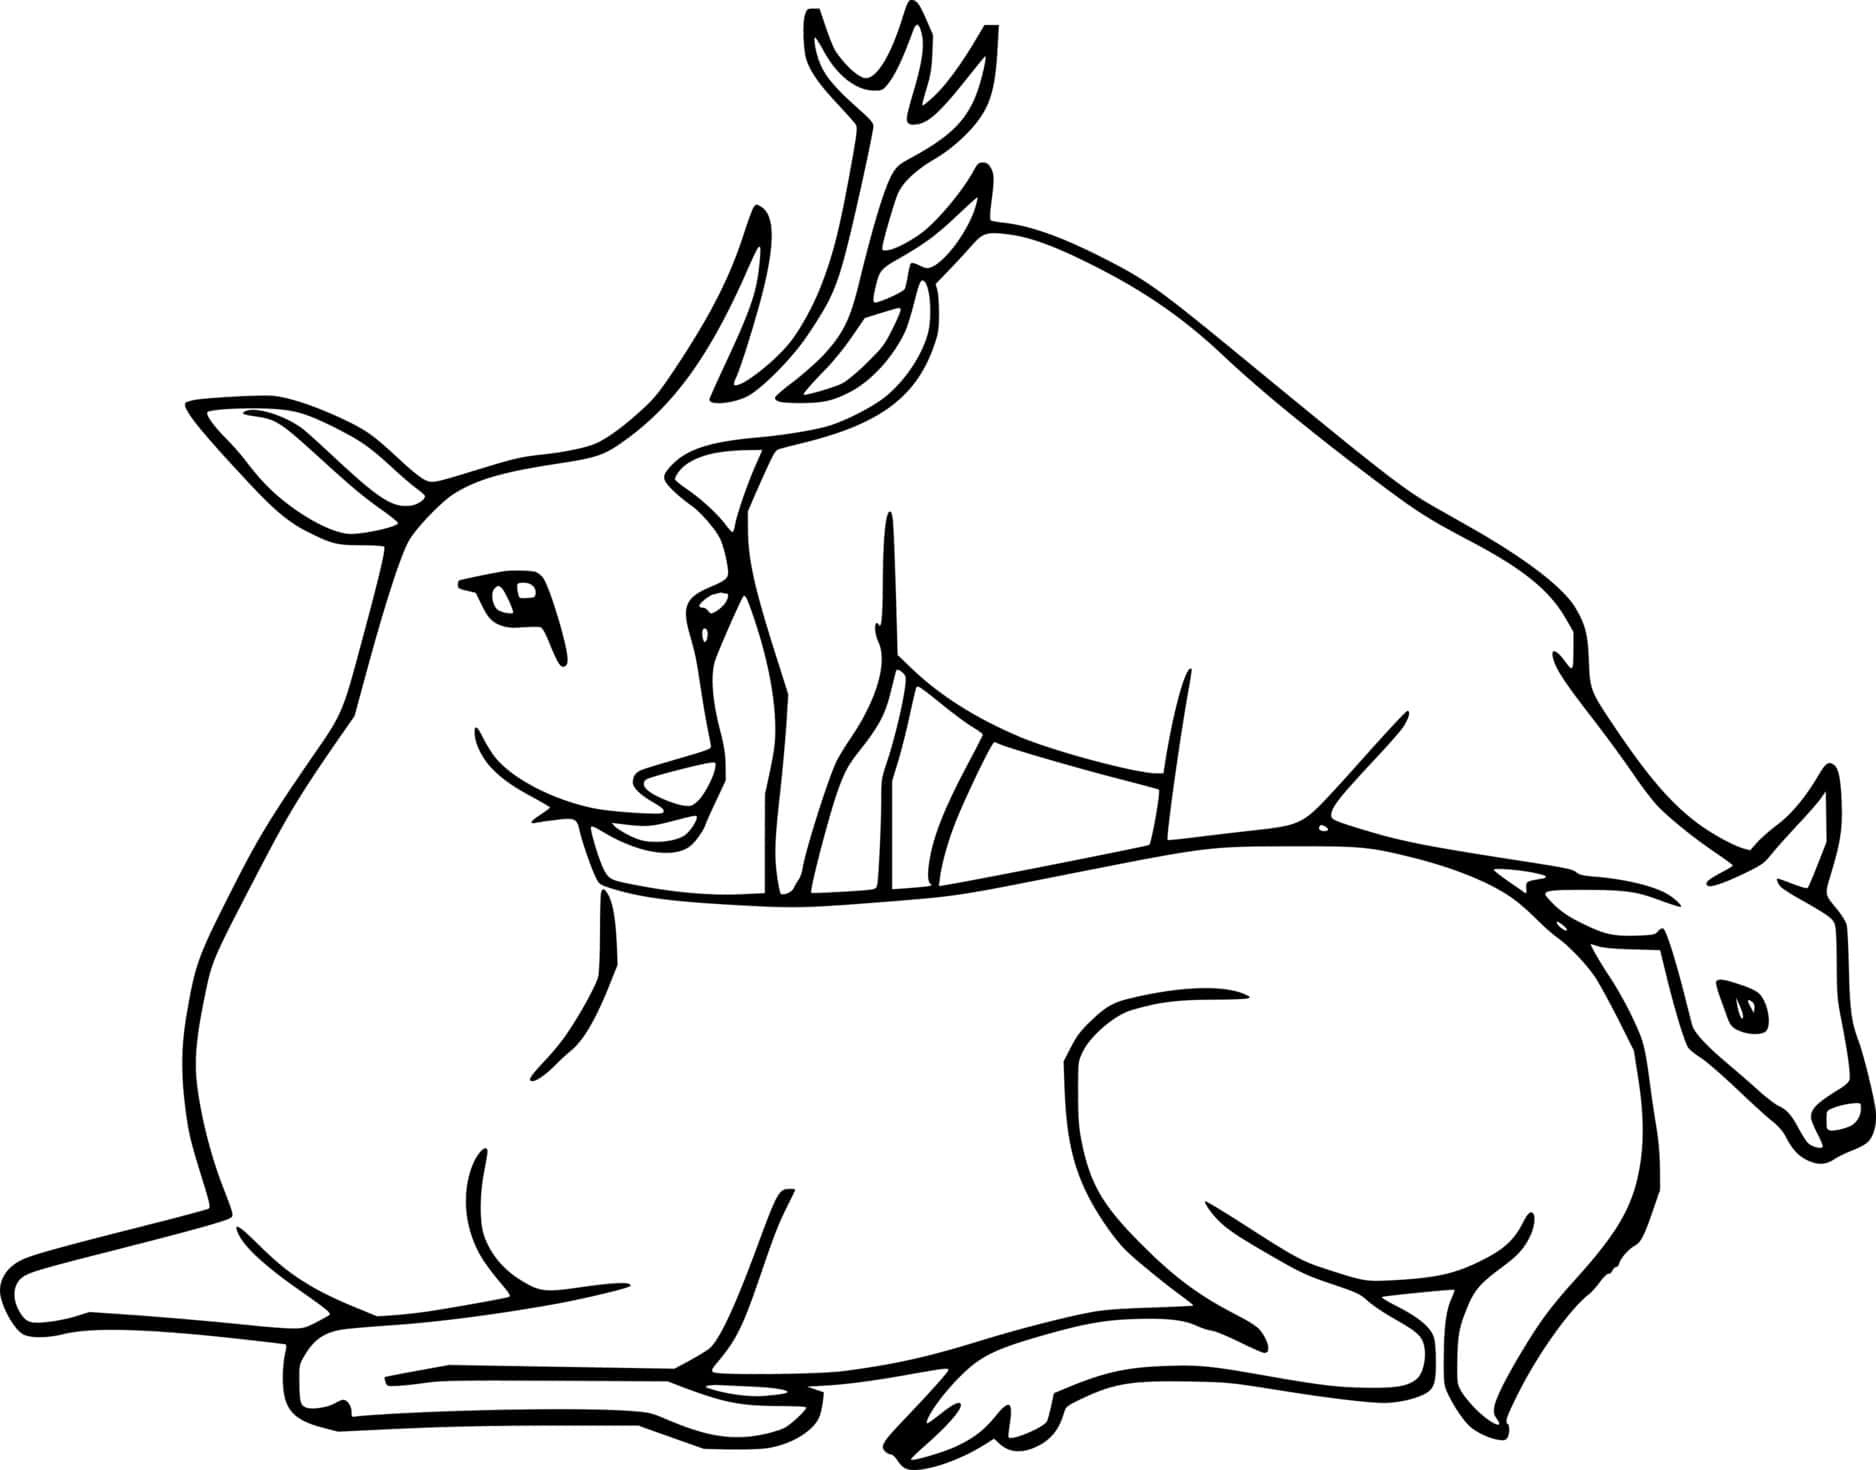 Two Simple Deer Coloring Page